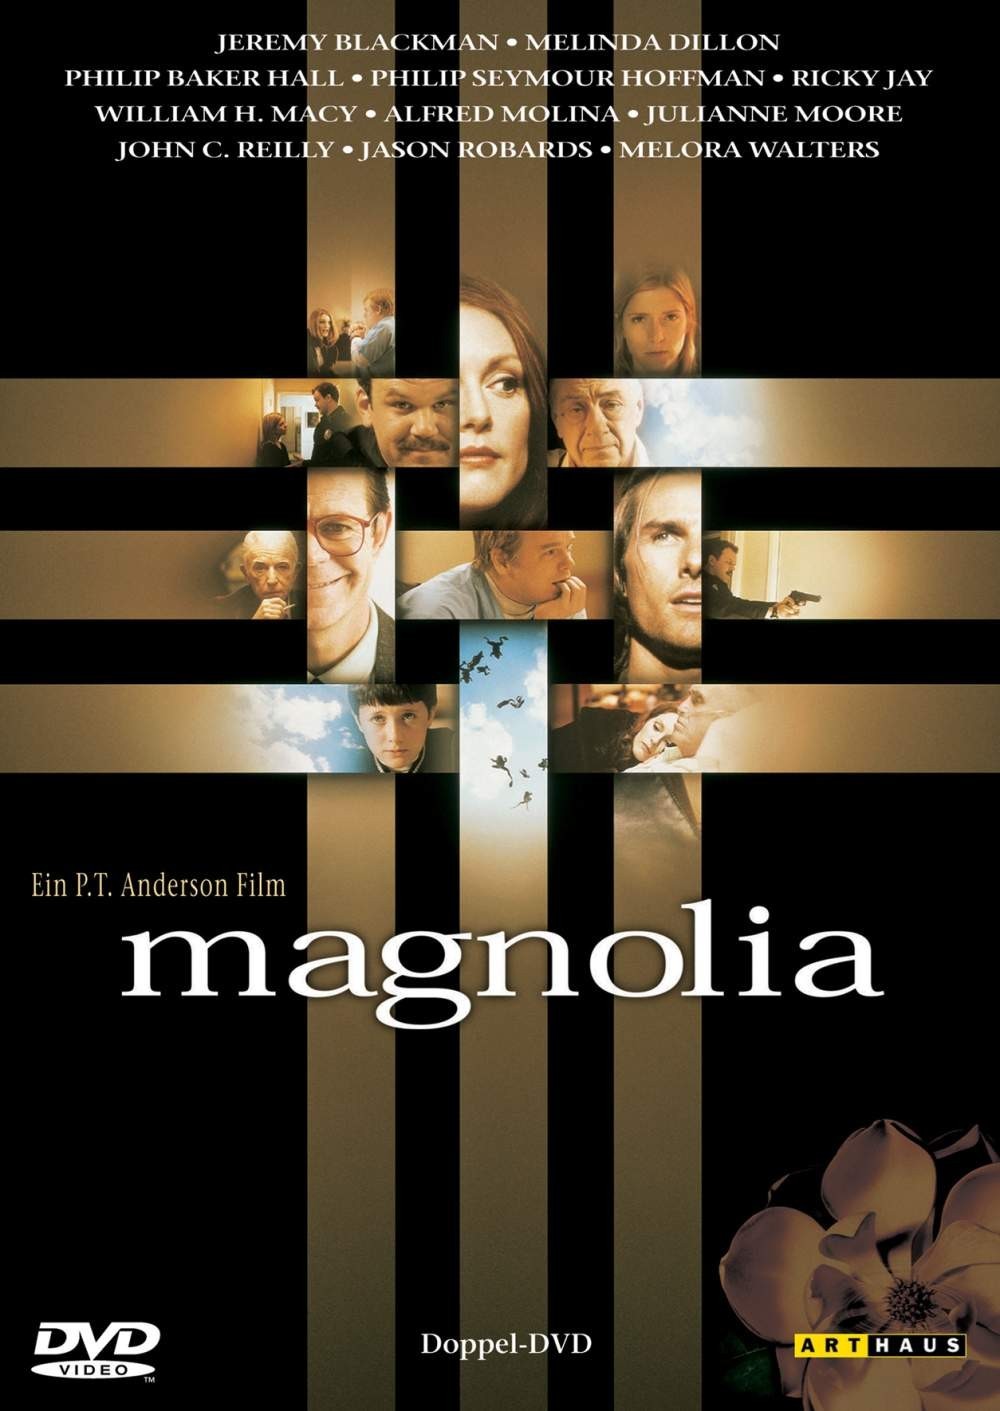 Magnolia (1999) - DVD PLANET STORE